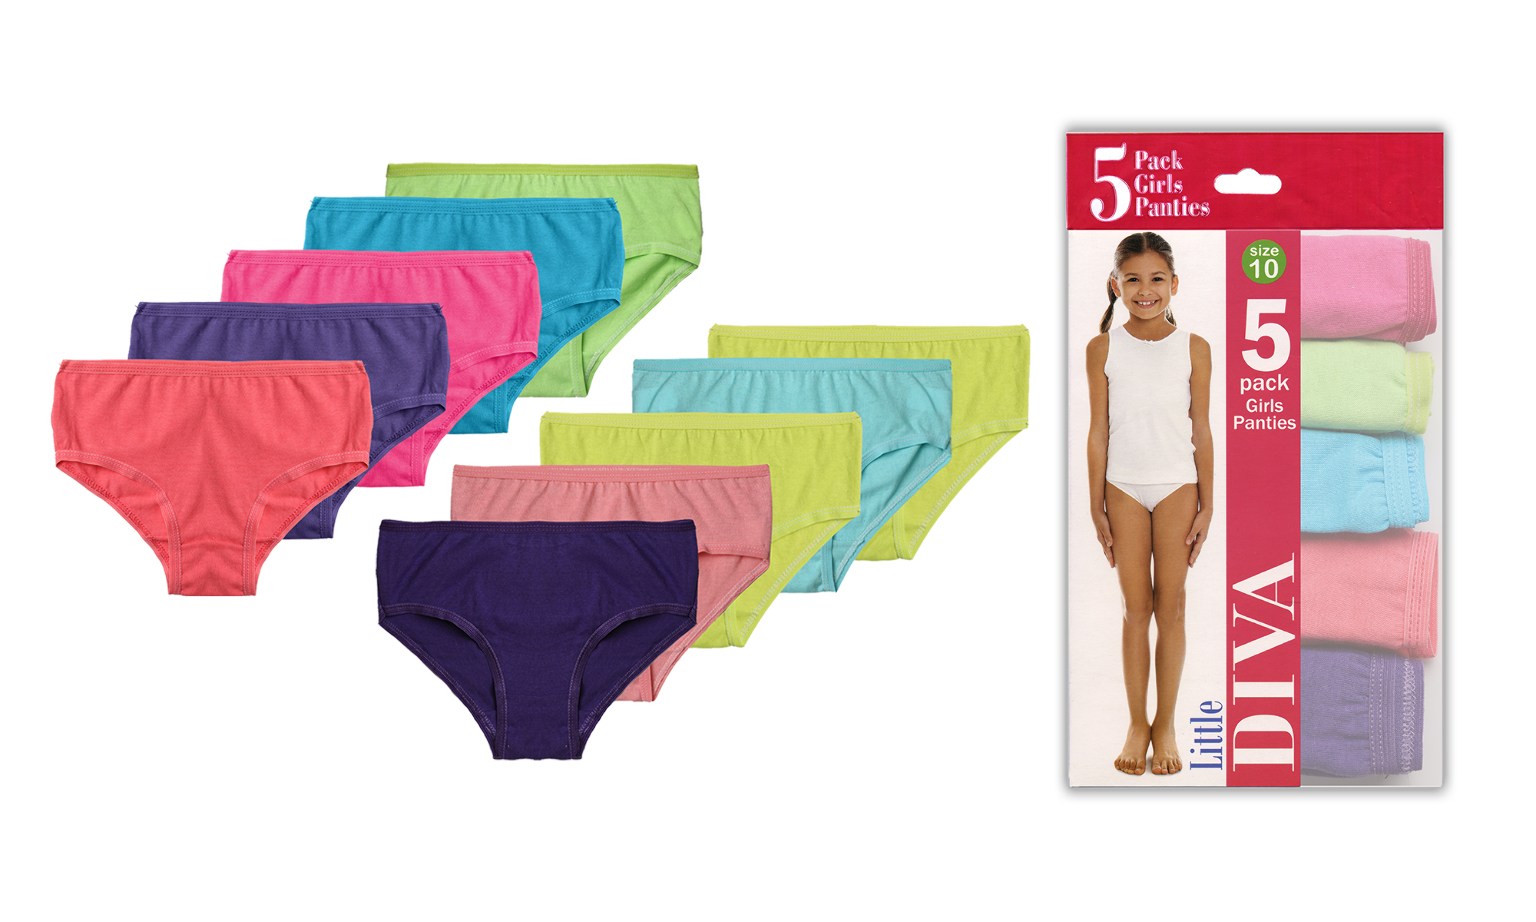 Wholesale Girl's Printed Underwear - Cotton, Sizes 4-16